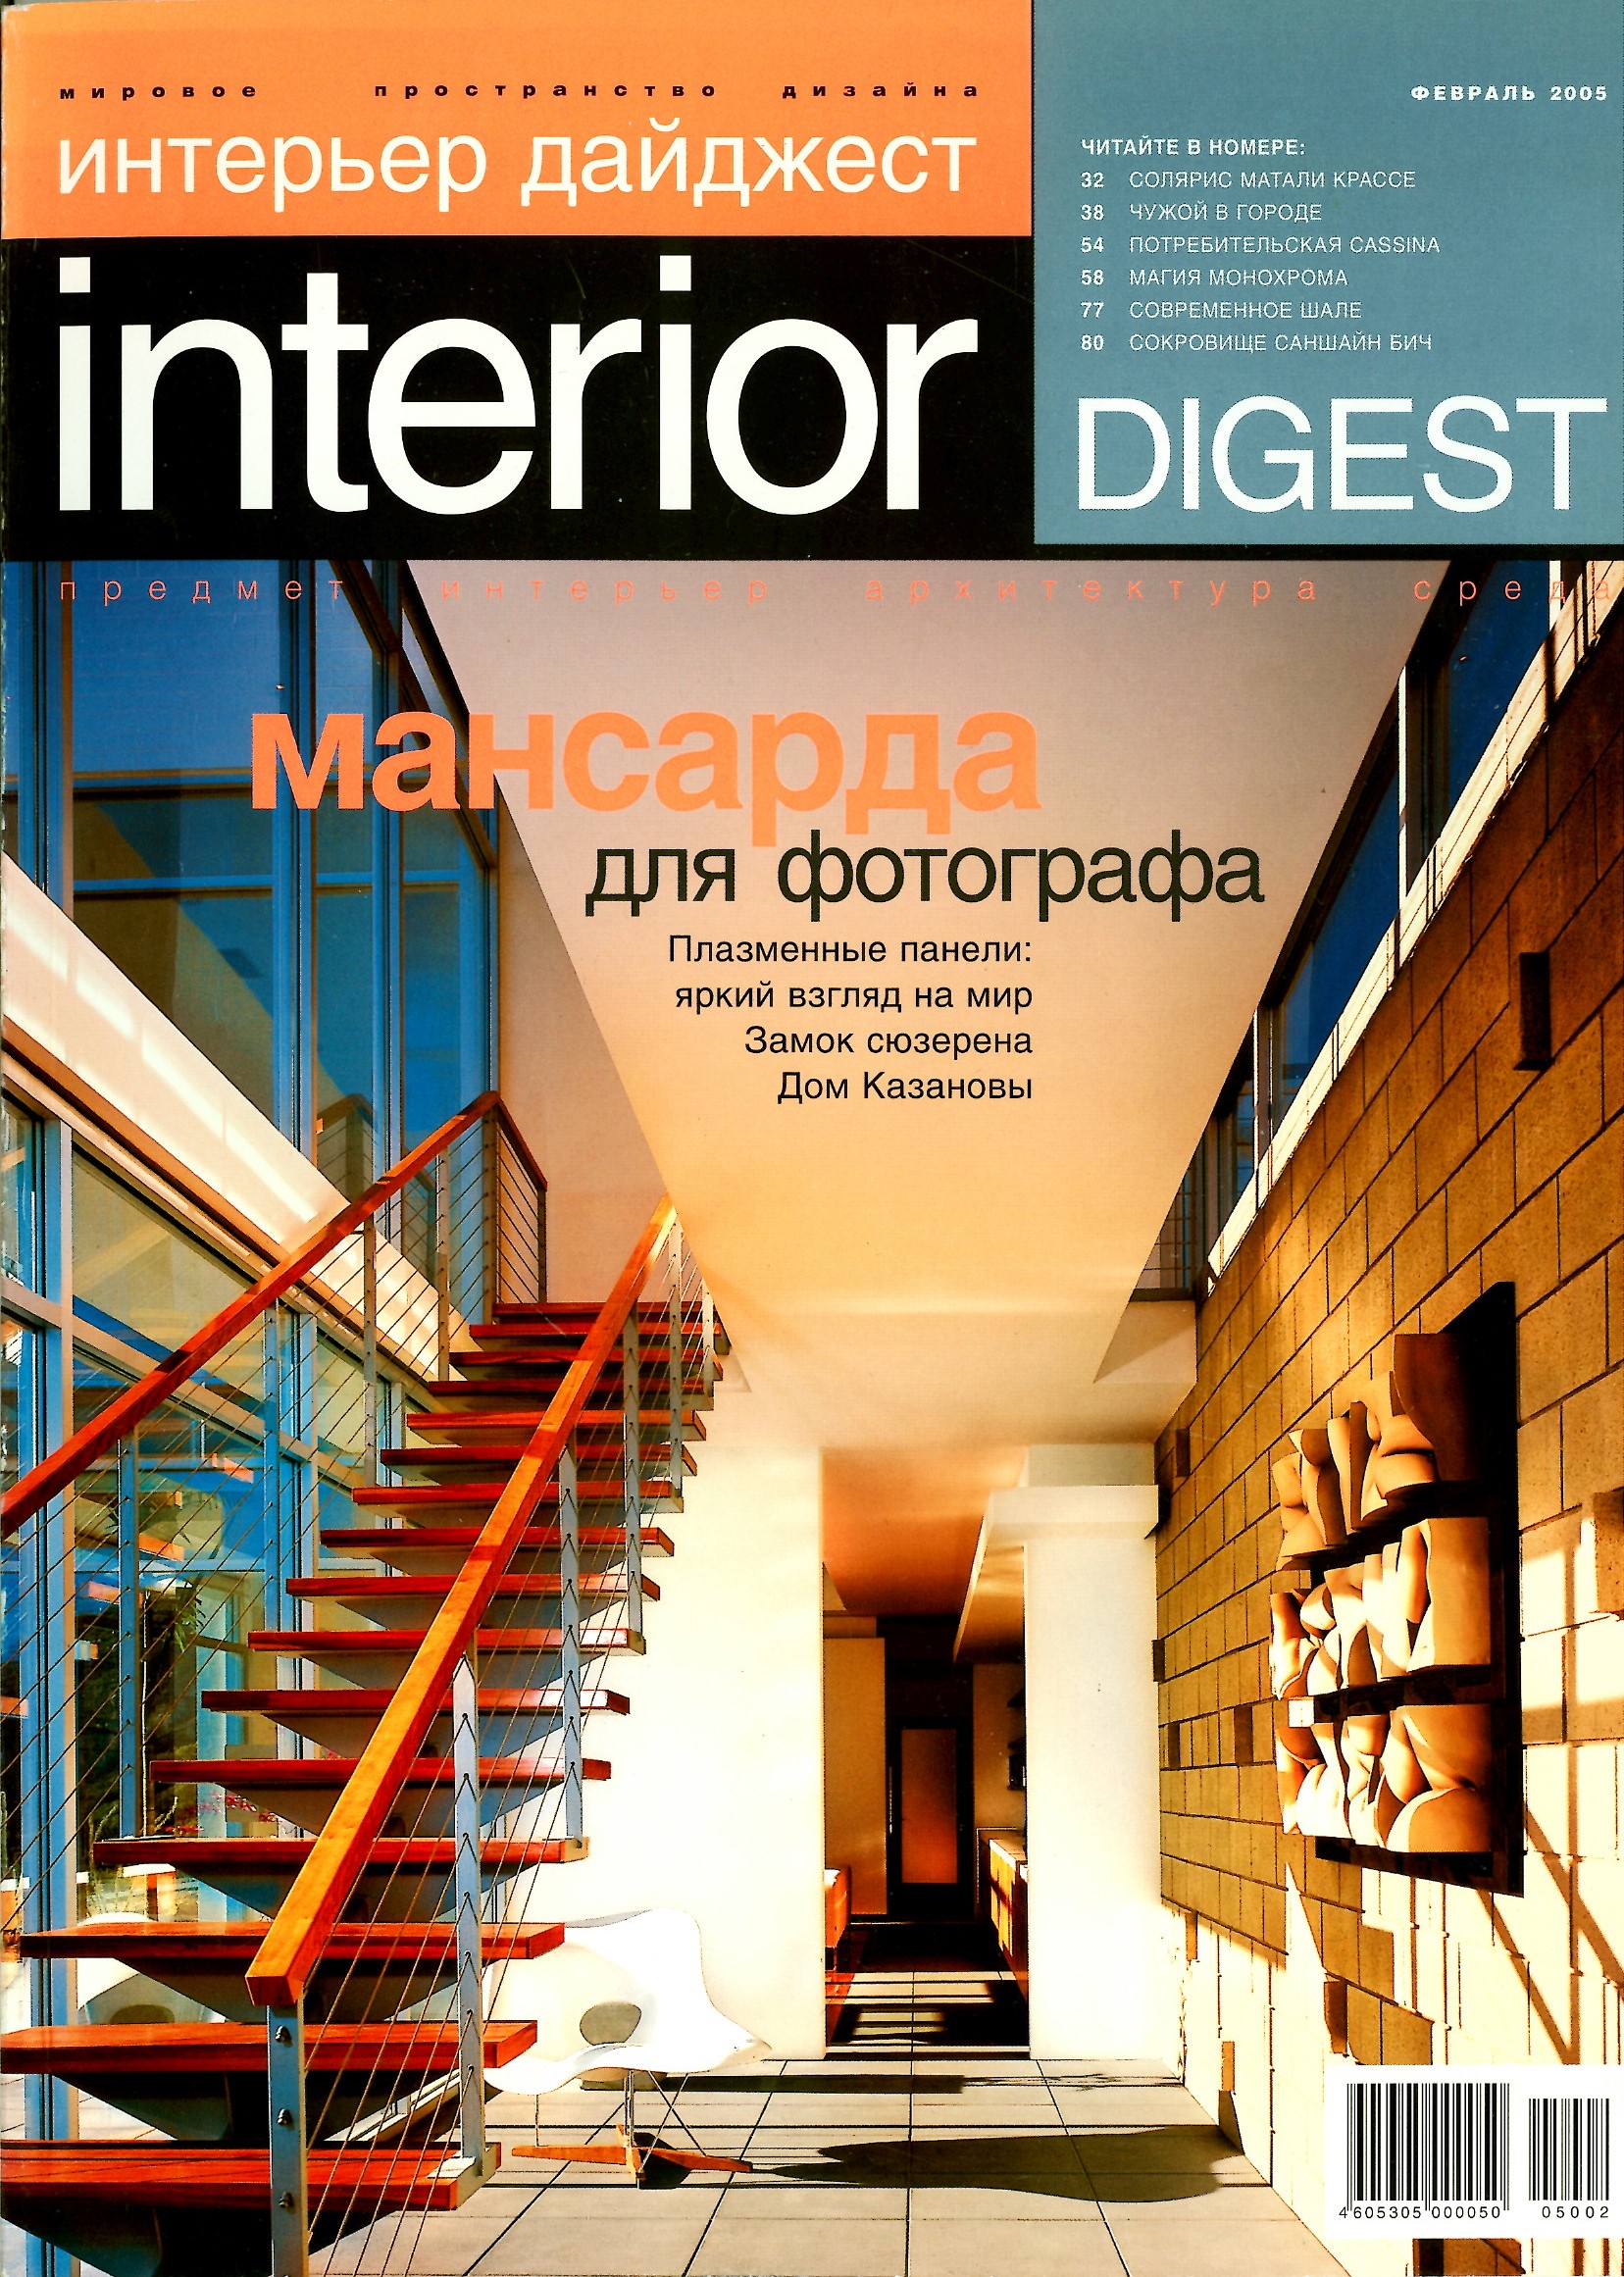 Russian_Interior Digest 2005.jpg